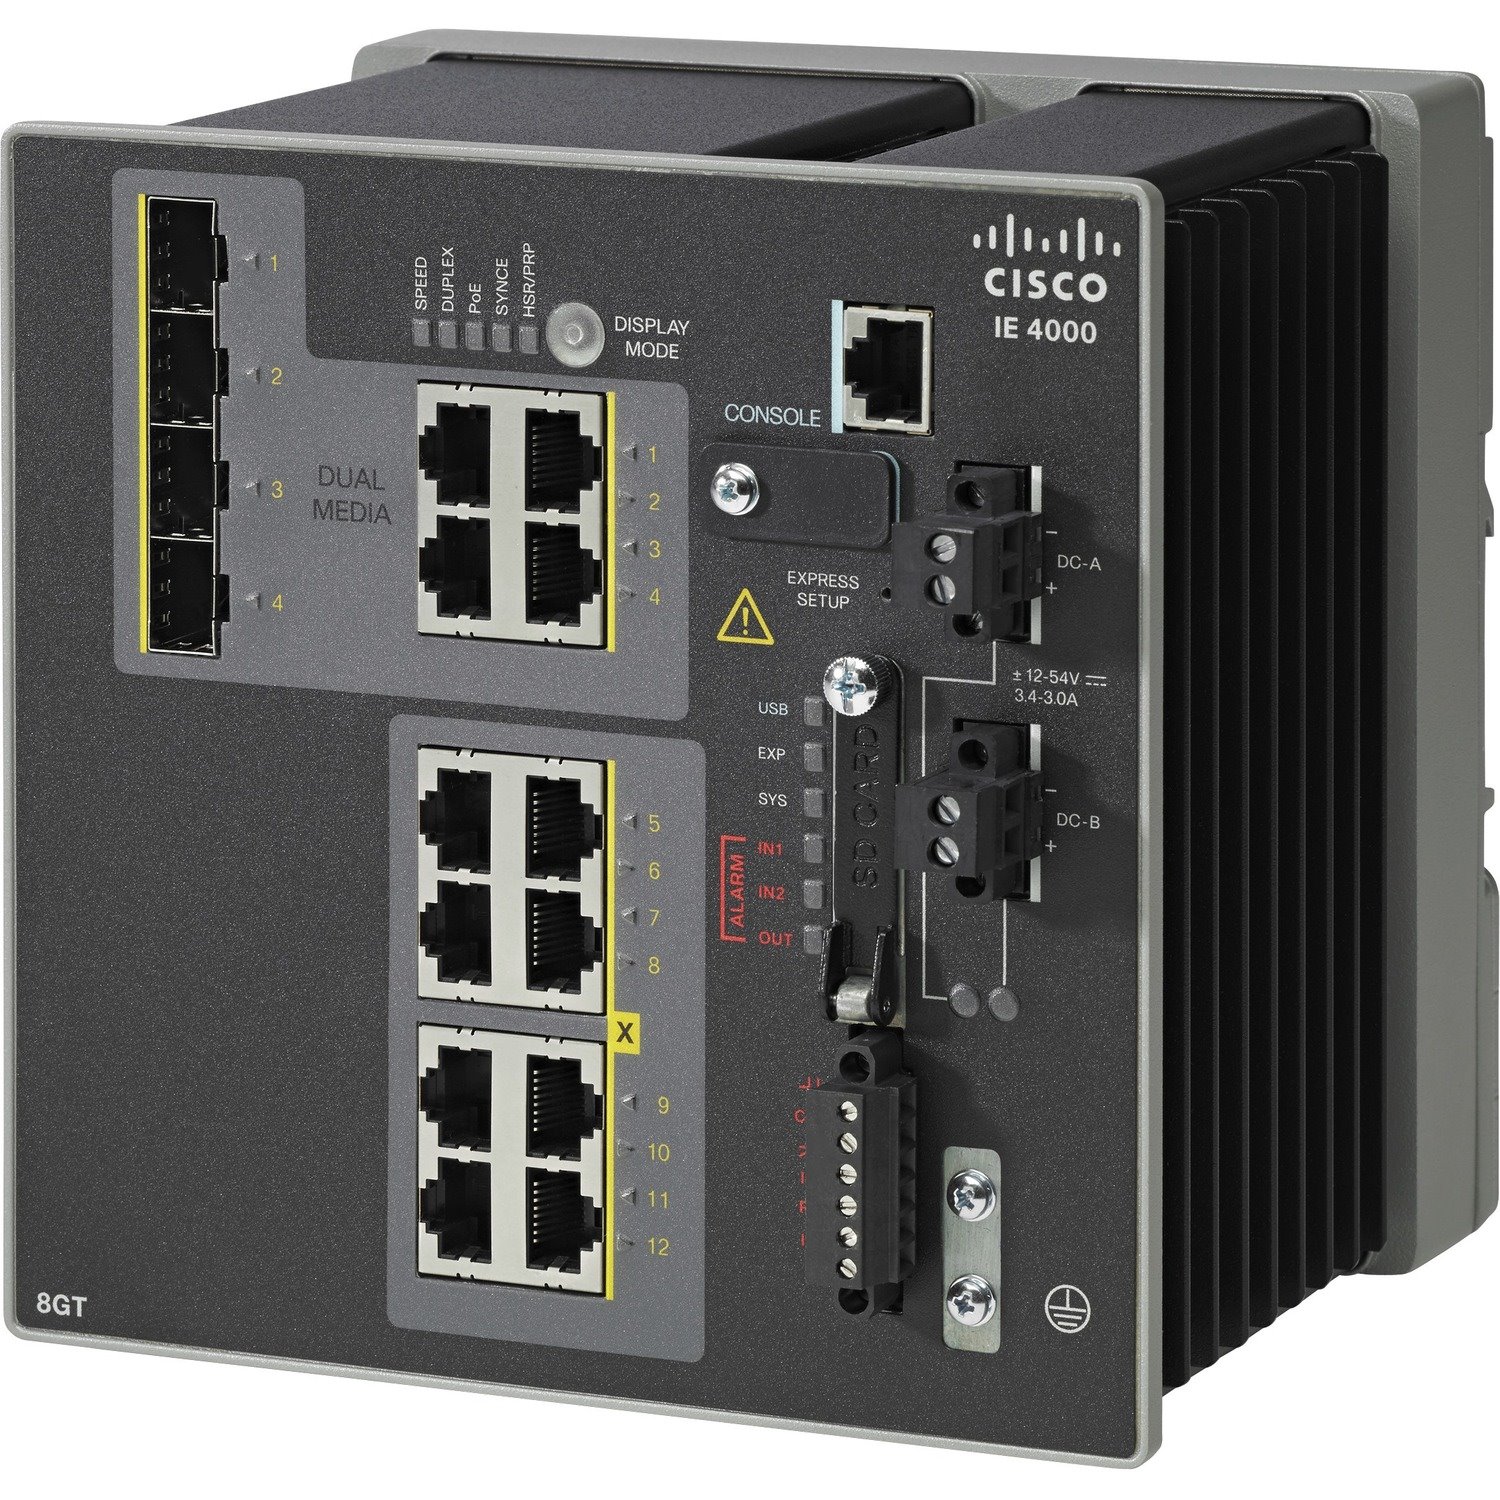 Cisco IE-4000-8GT4G-E Layer 3 Switch